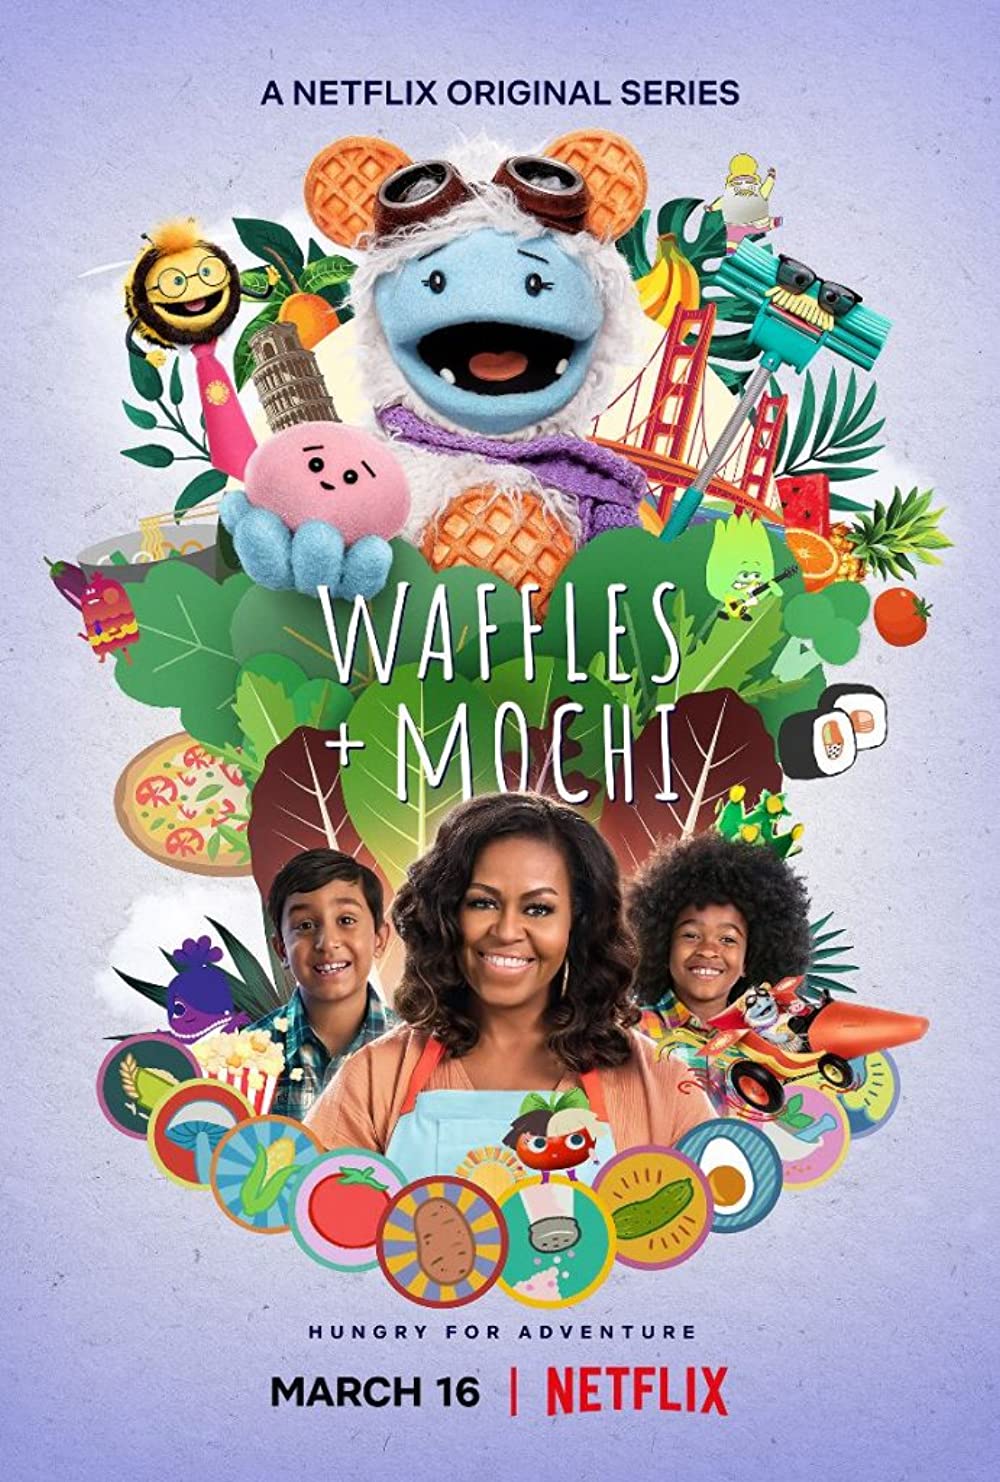 Filmbeschreibung zu Waffles + Mochi